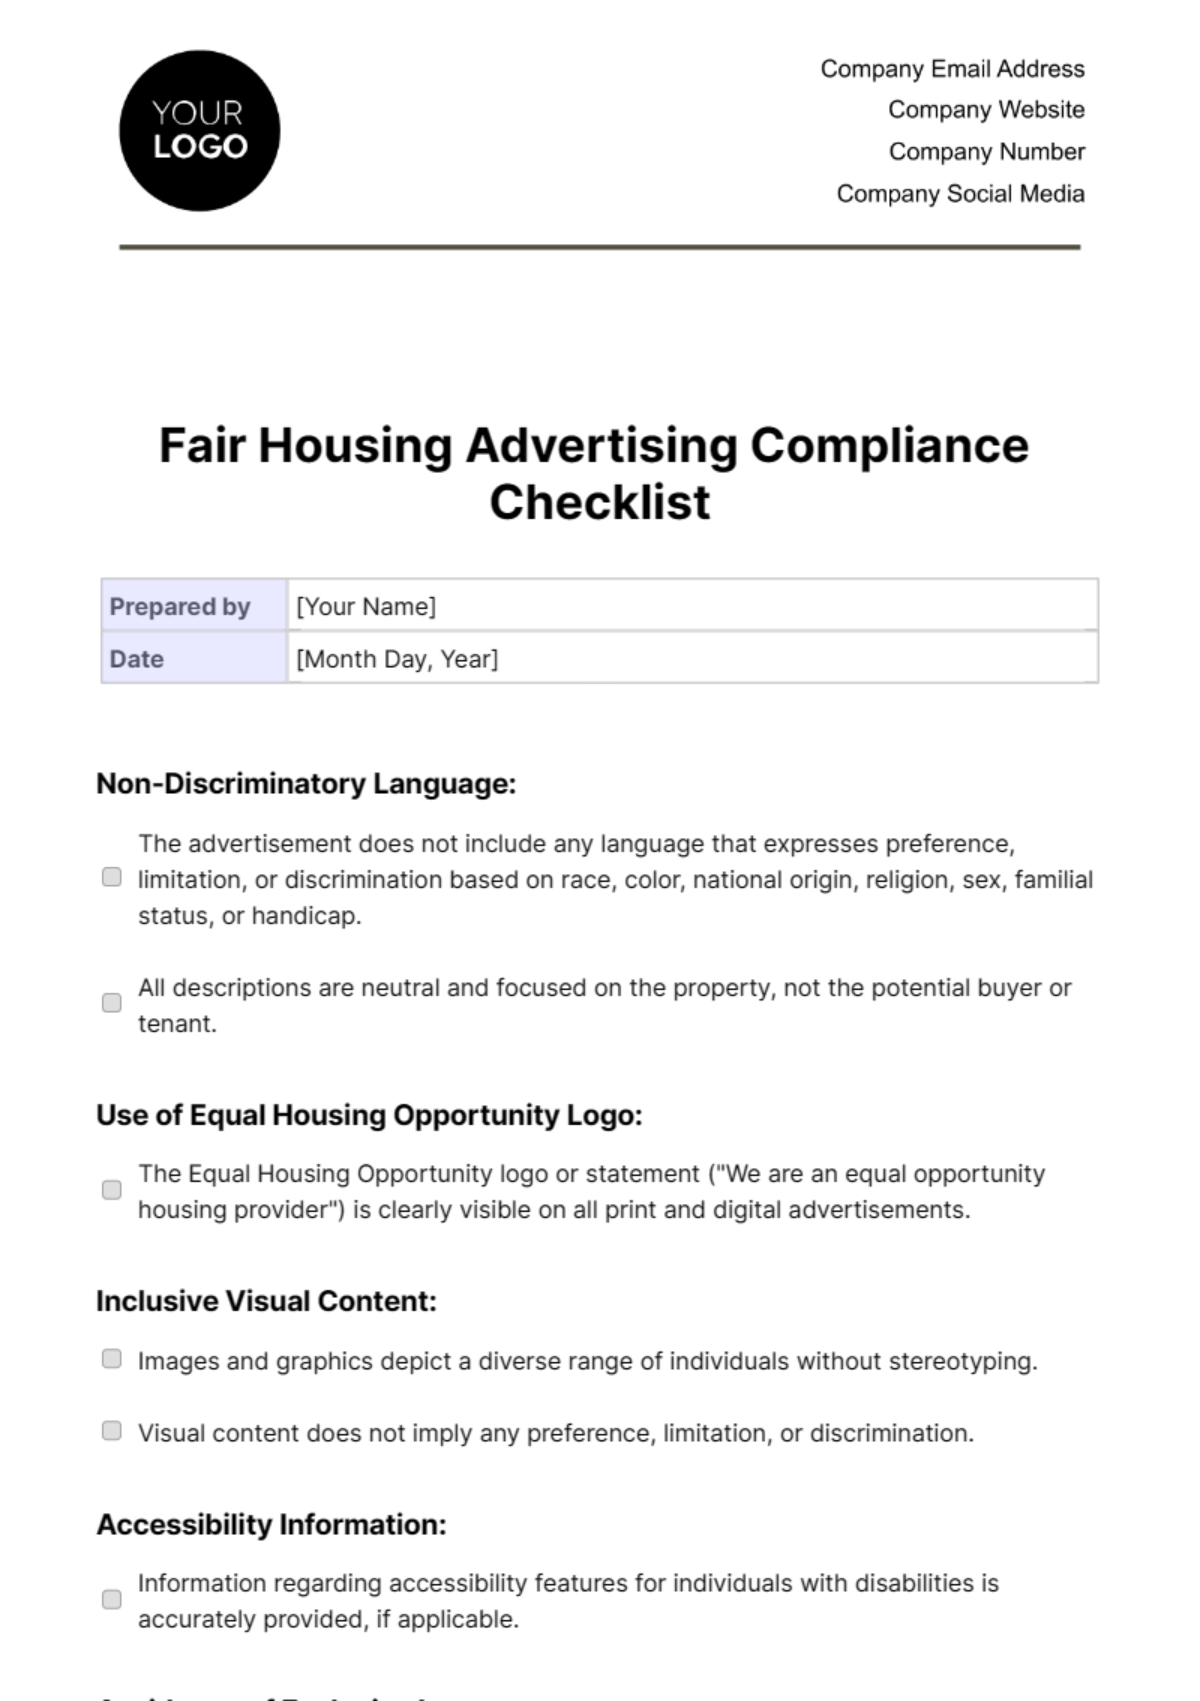 Free Fair Housing Advertising Compliance Checklist Template